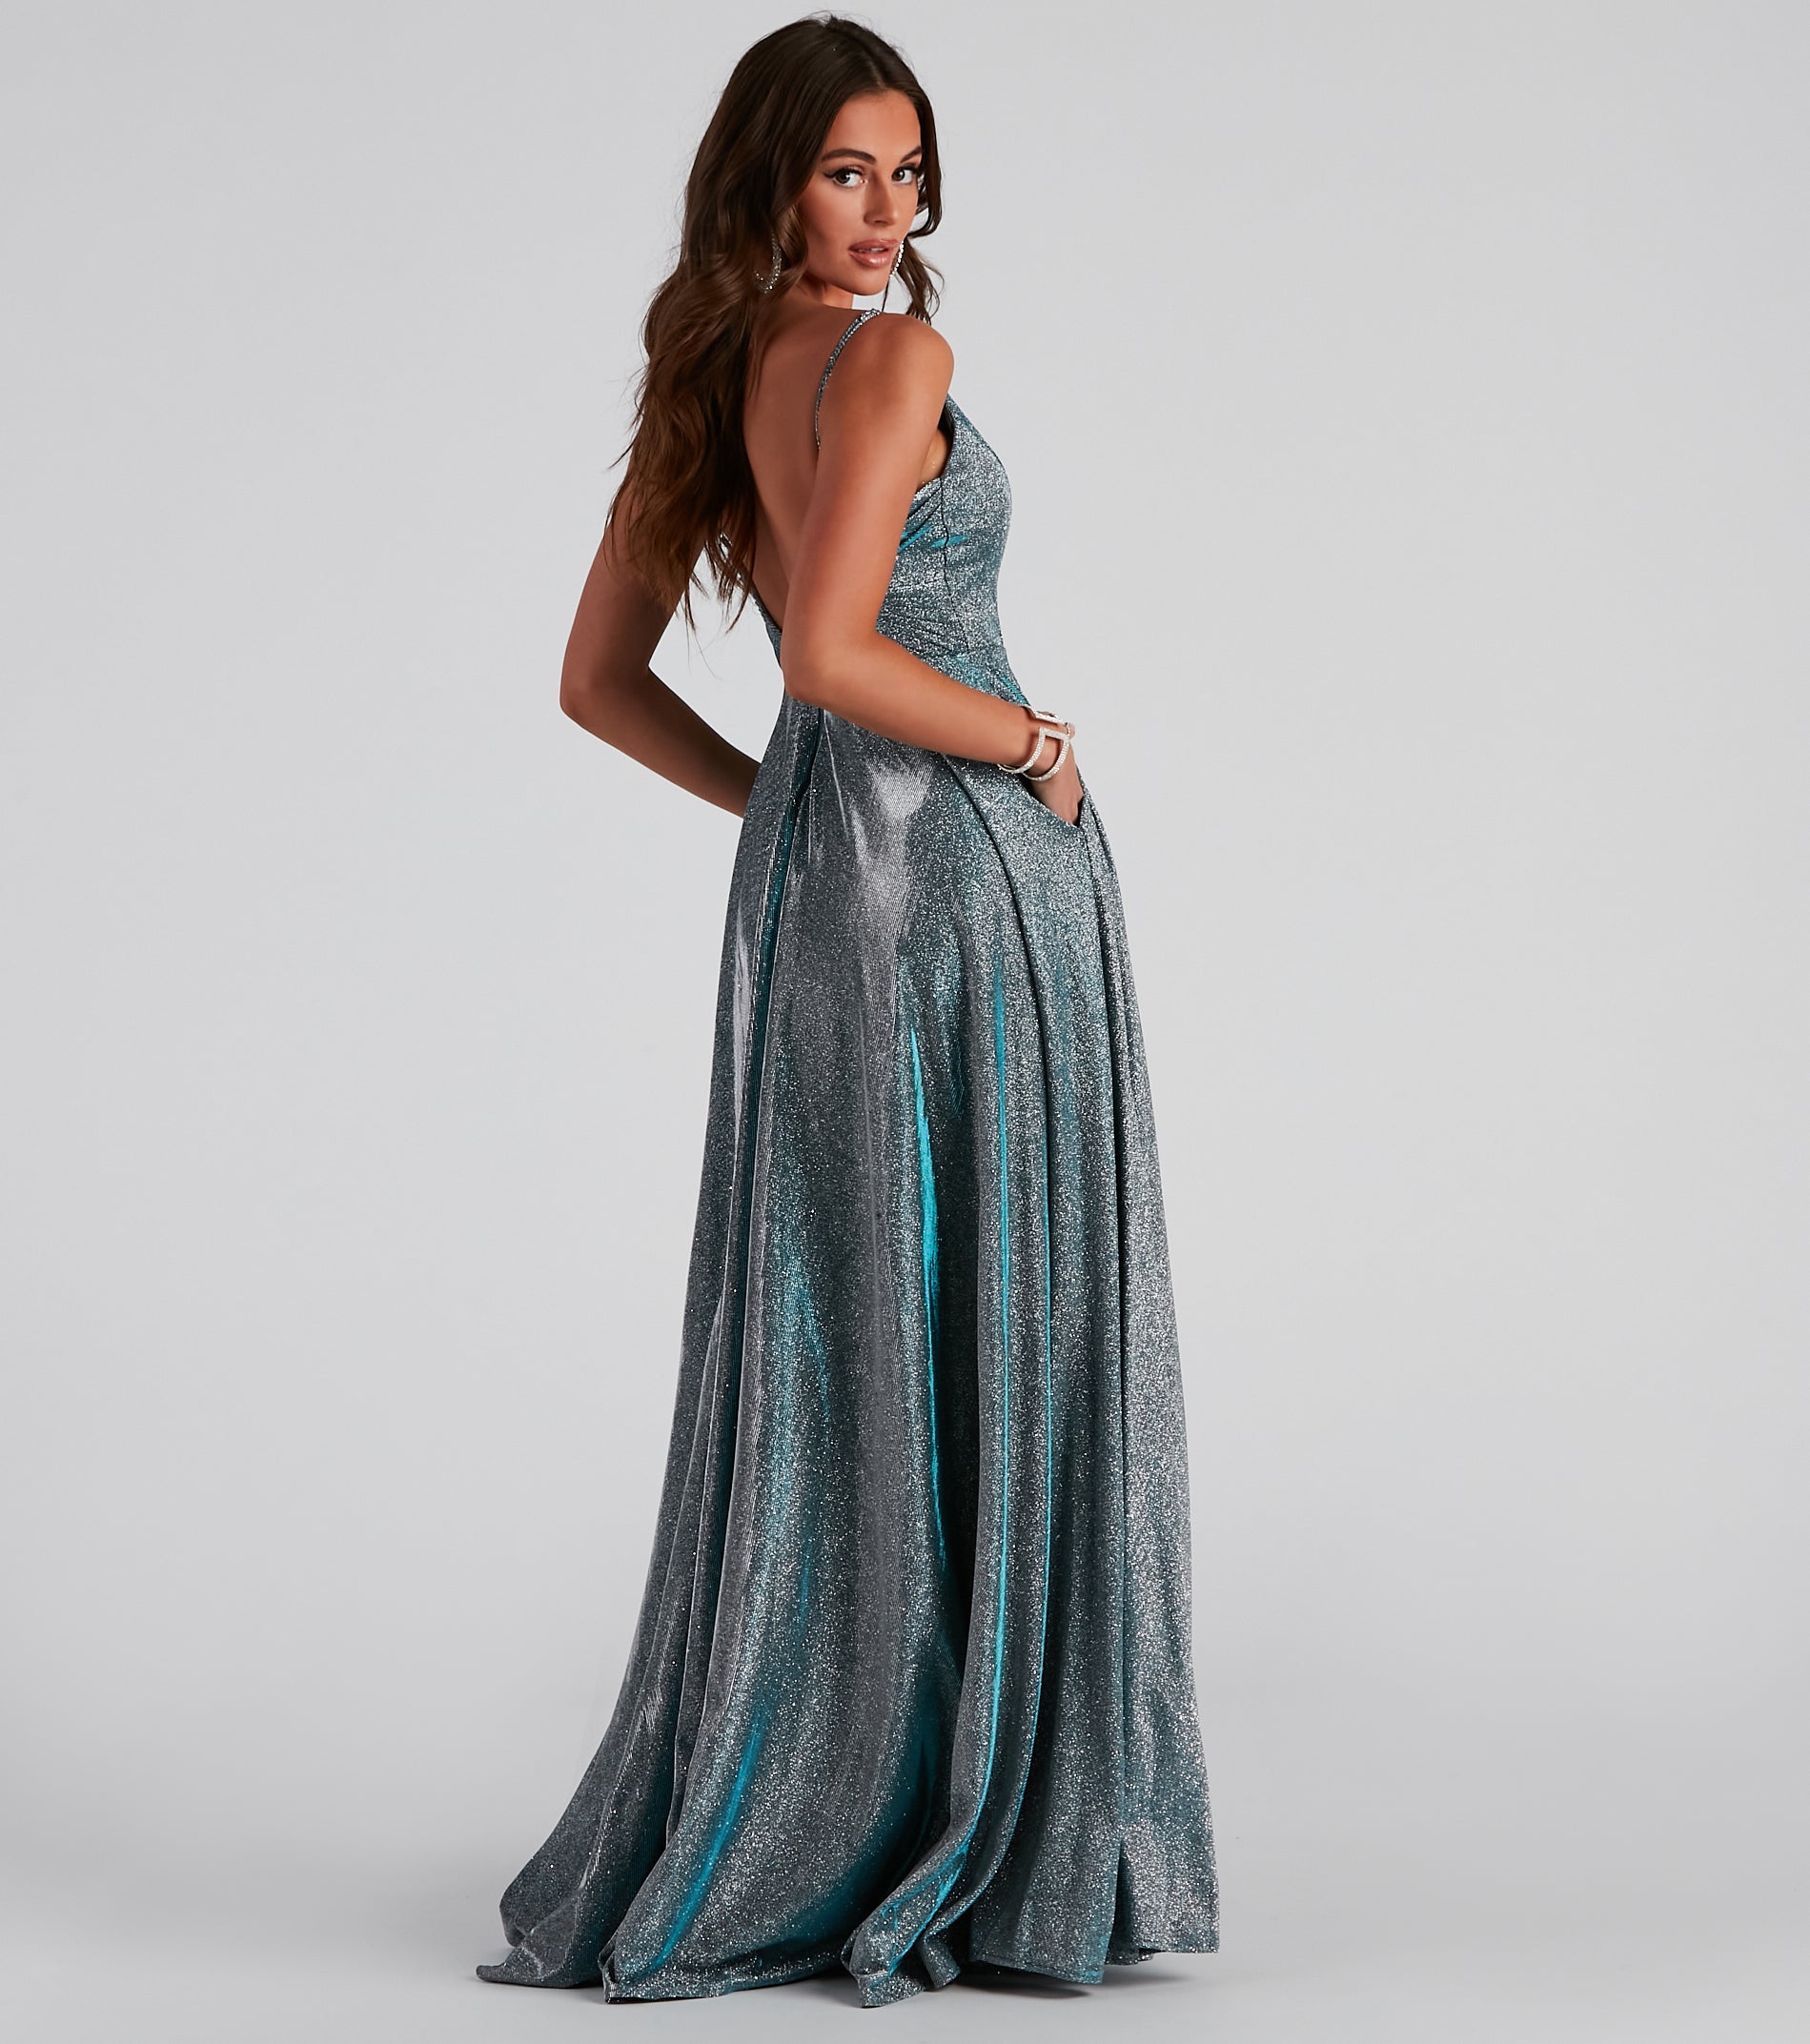 Soleil Formal Open Back Glitter Dress